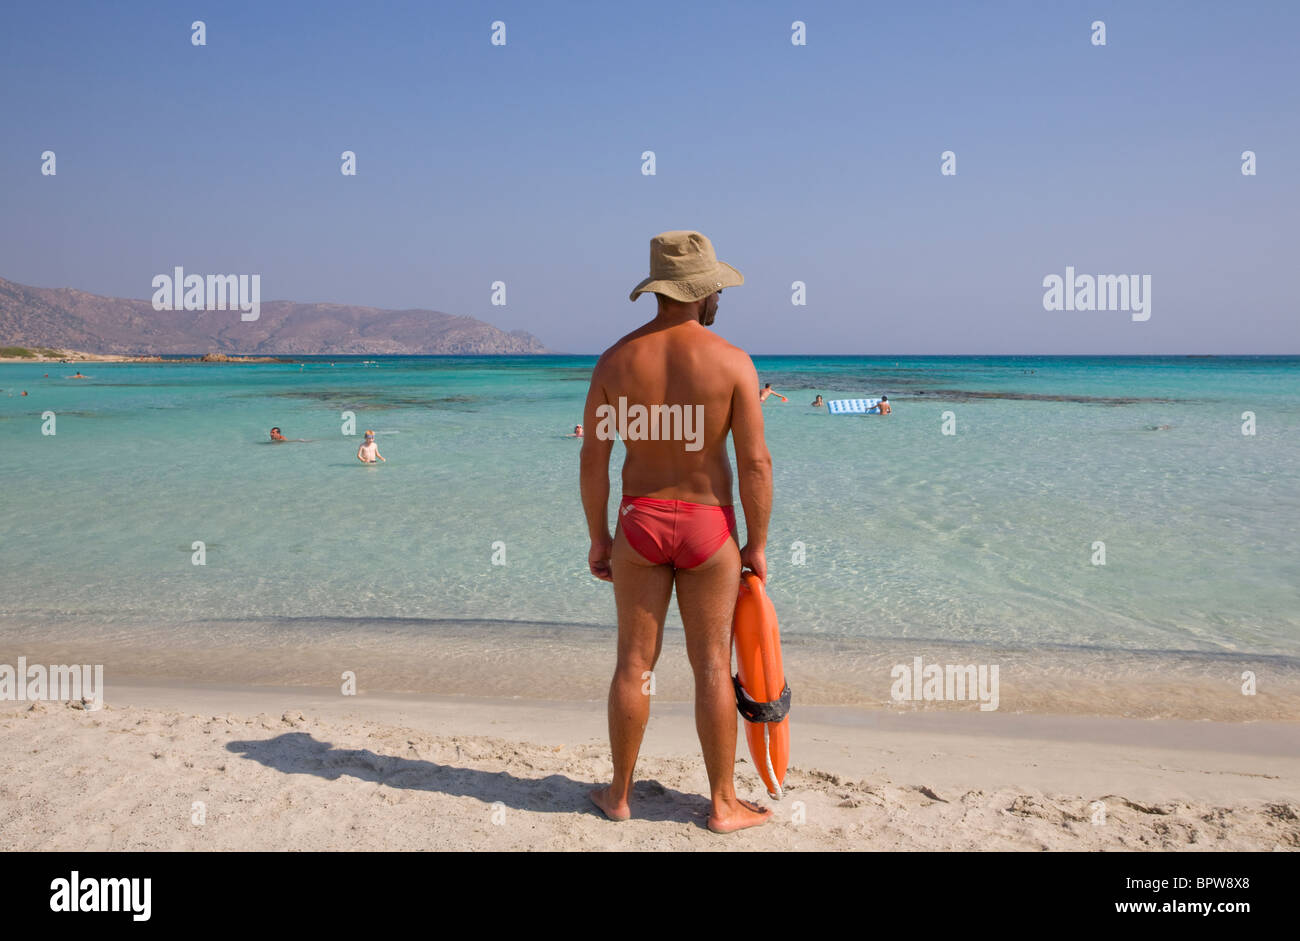 Lifeguard on a beach Stock Photo